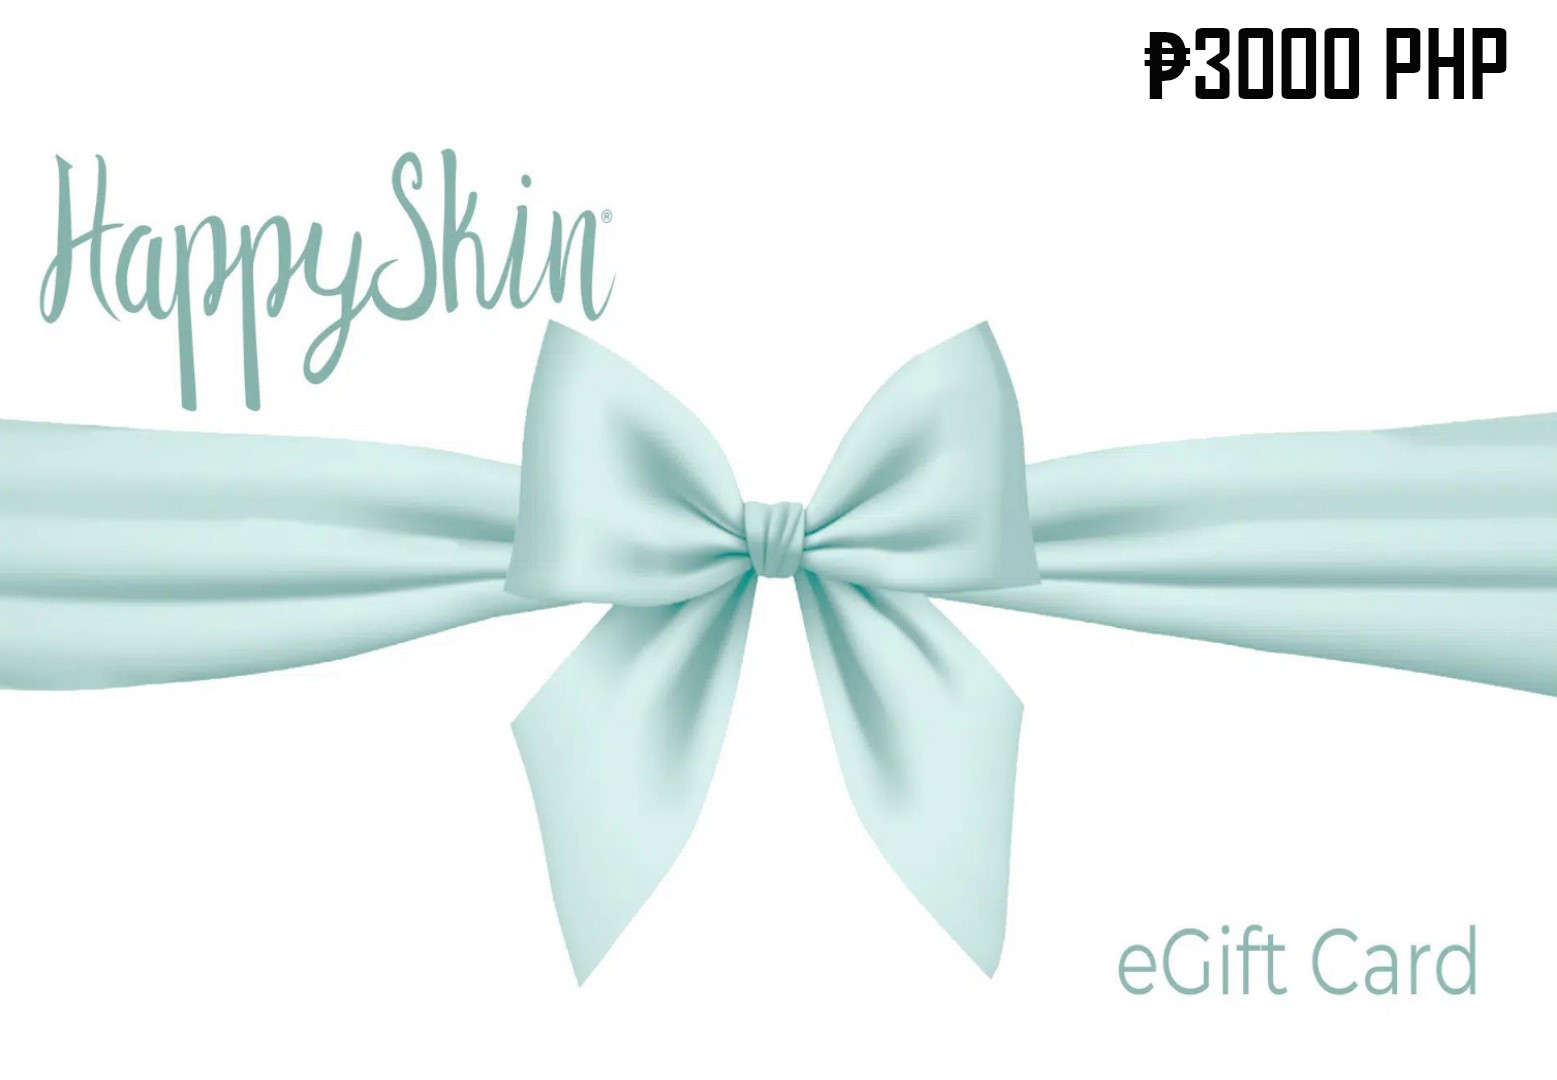 Happy Skin ₱3000 PH Gift Card $62.52